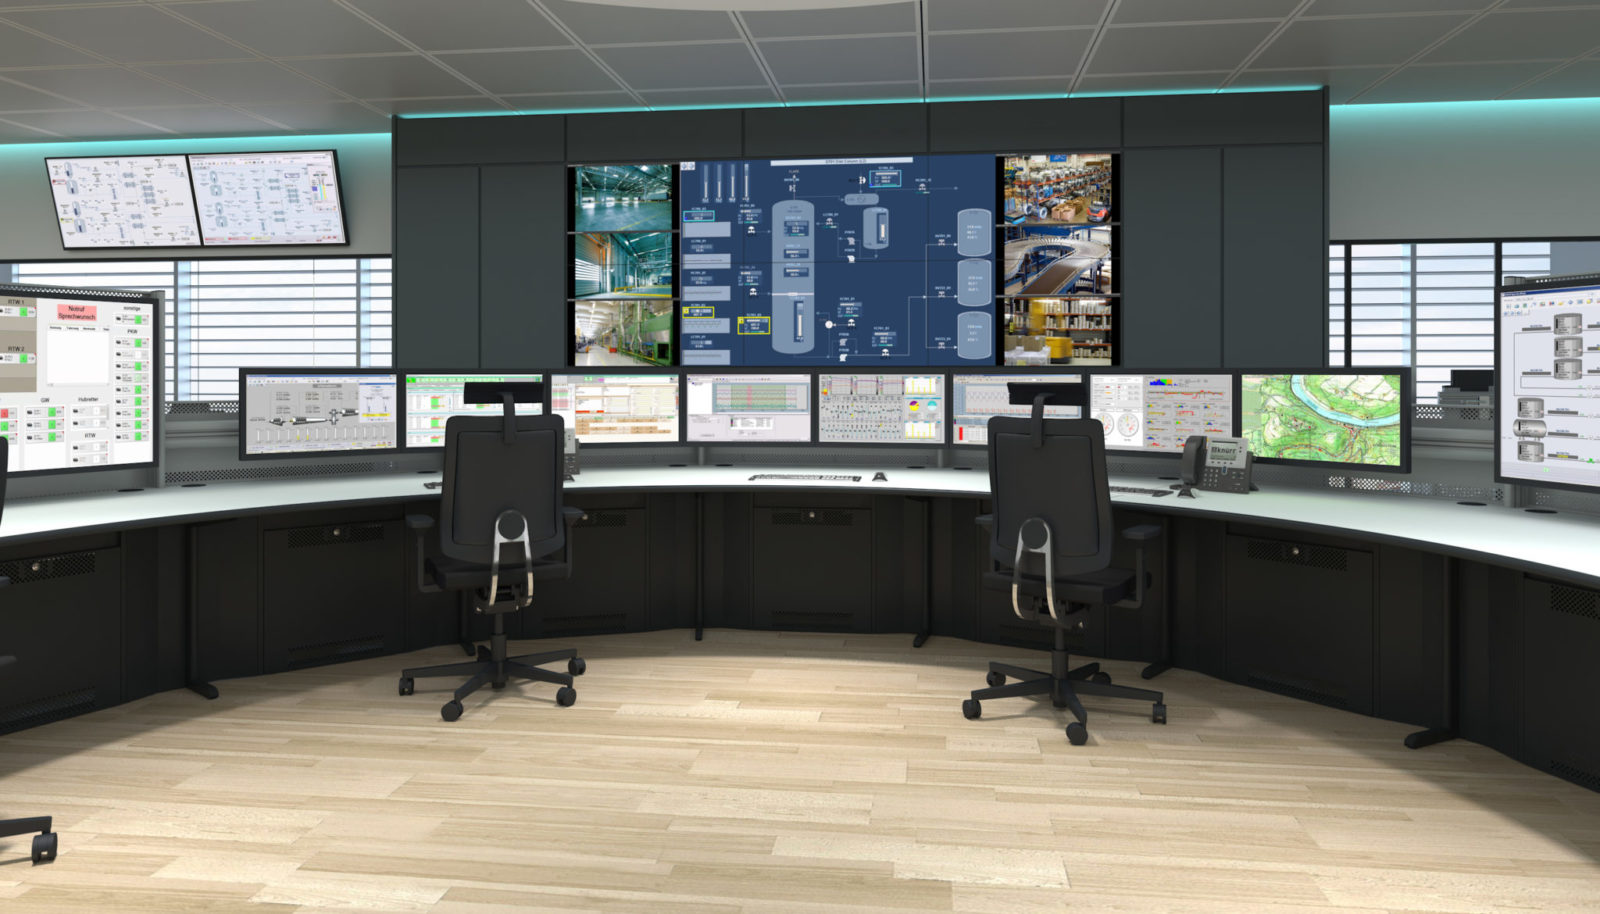 Graphic illustration of a control room design